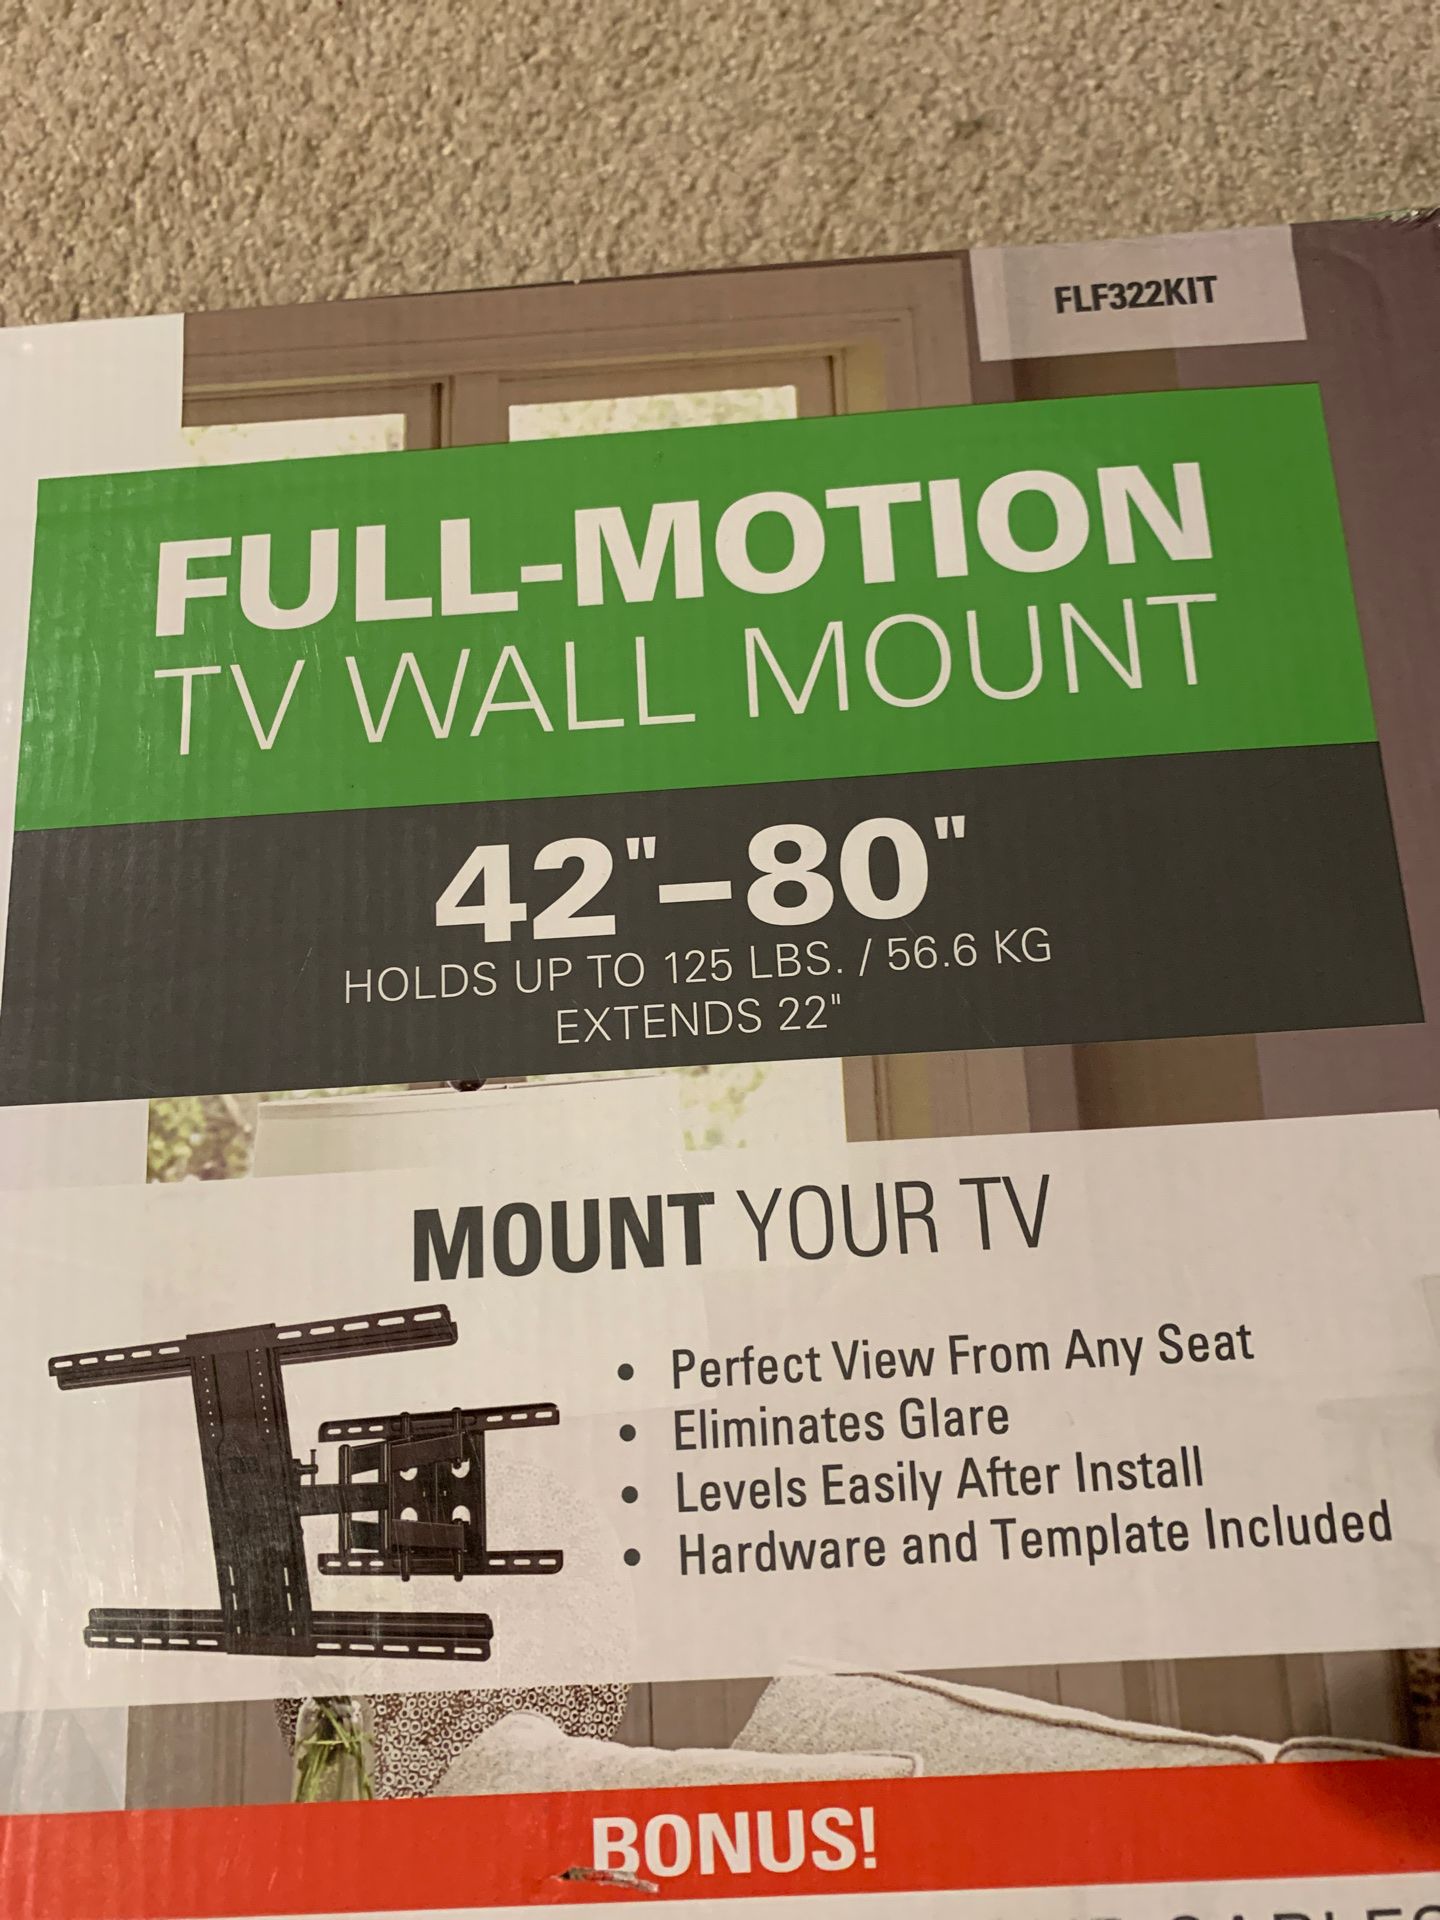 Full Motion TV WALL MOUNT